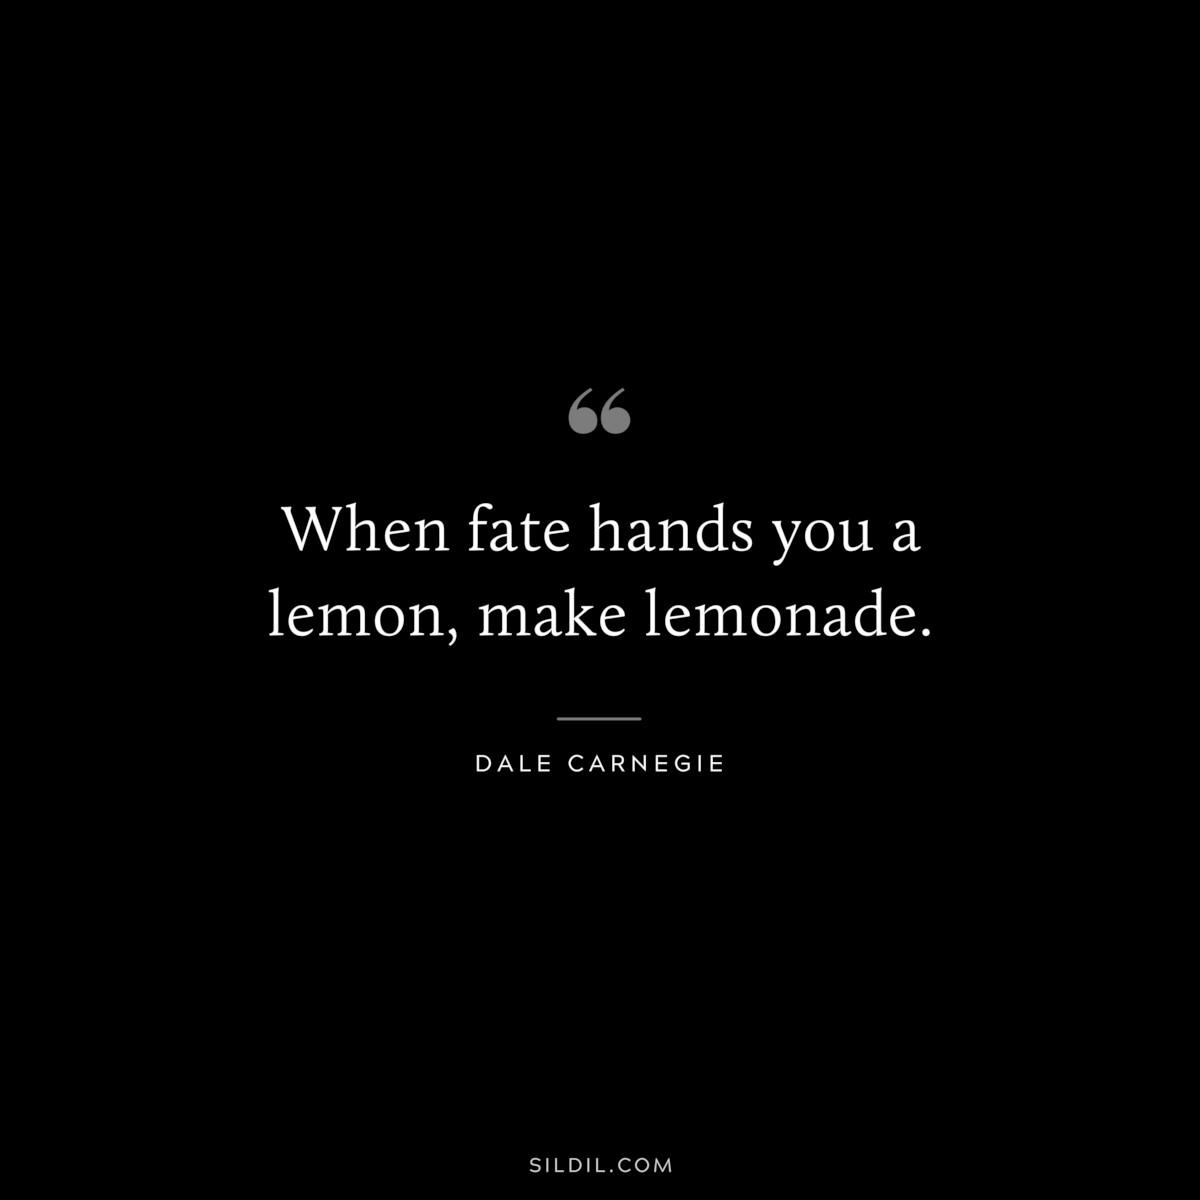 When fate hands you a lemon, make lemonade.― Dale Carnegie